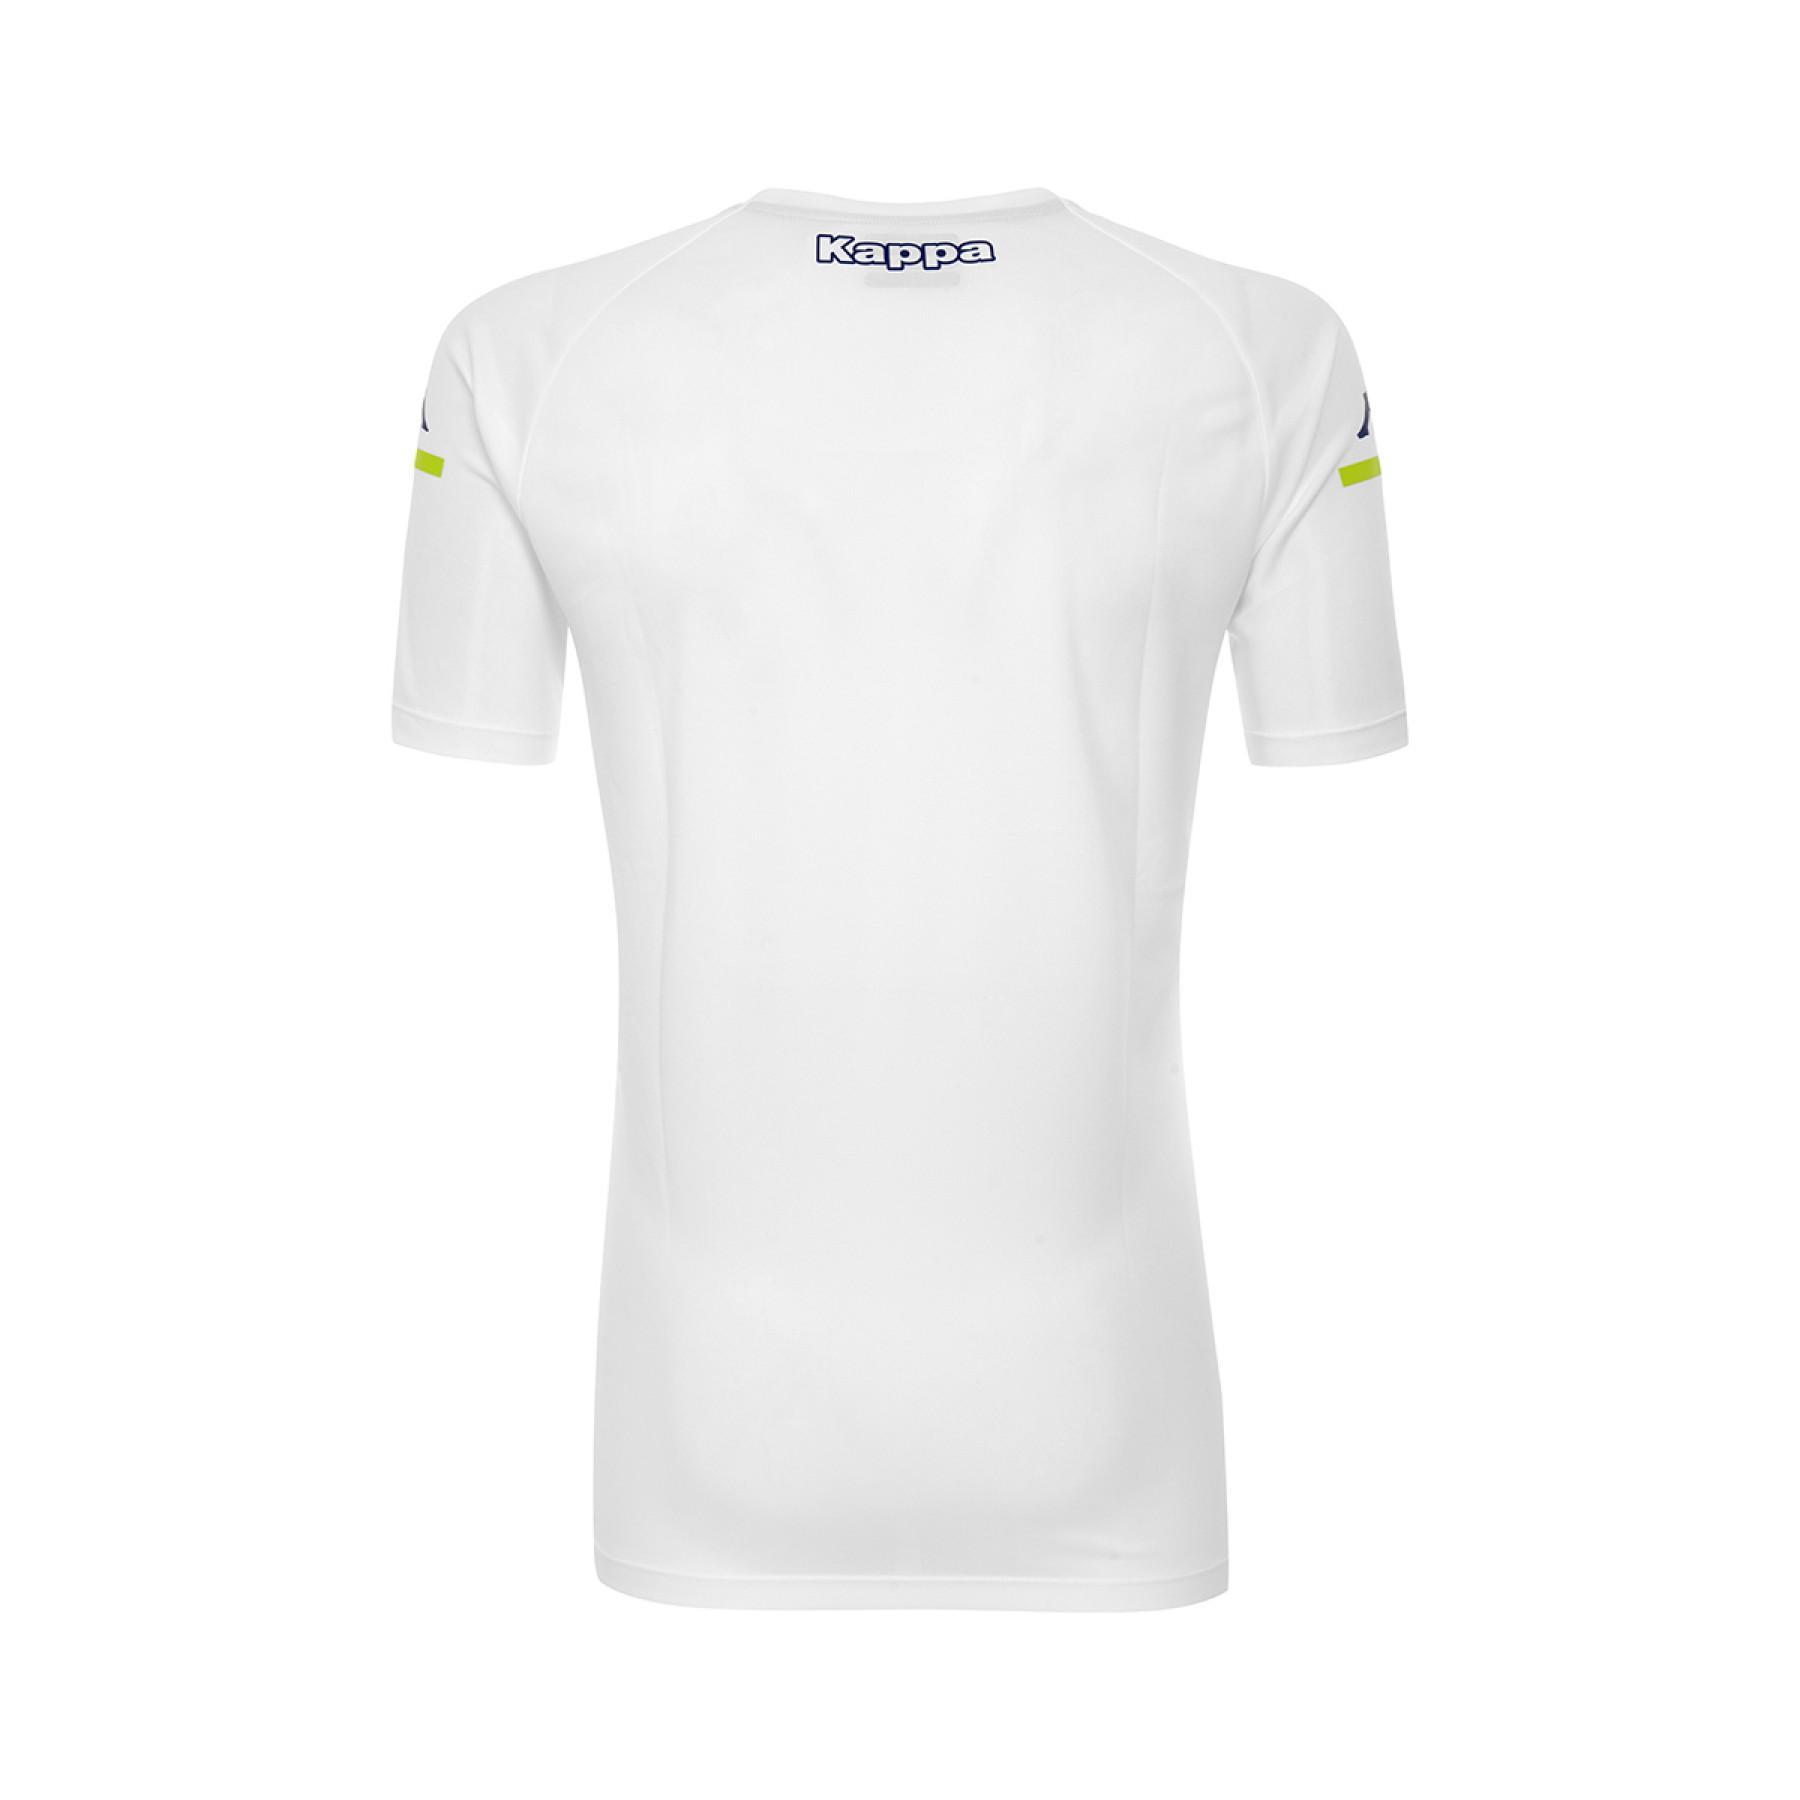 Kinder-T-Shirt Aston Villa FC 2020/21 aboupres pro 4